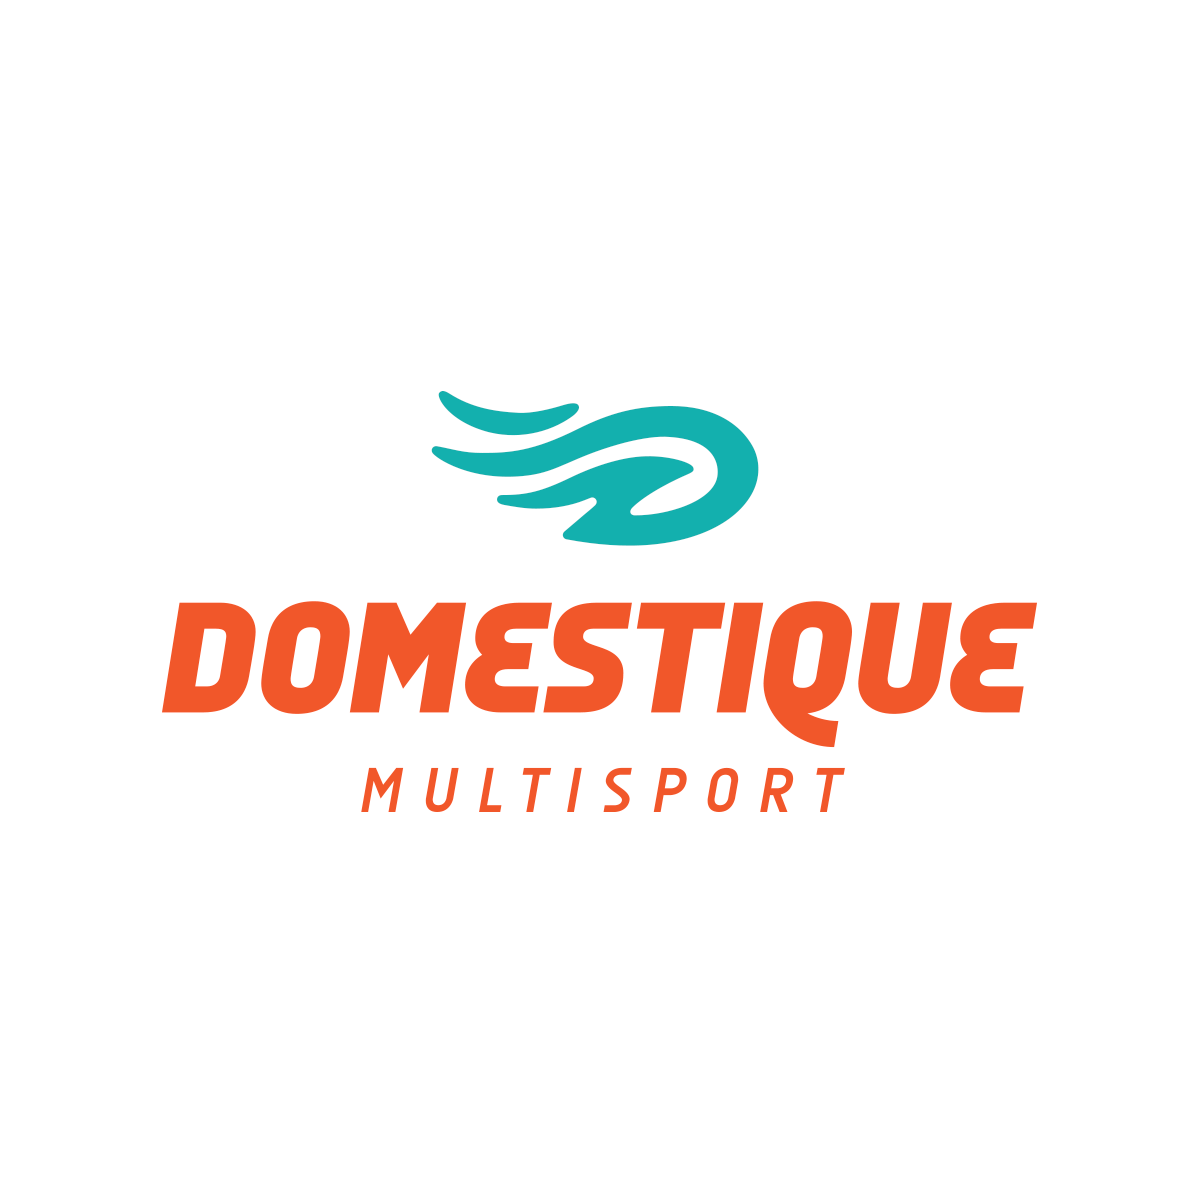 Multisport group logo